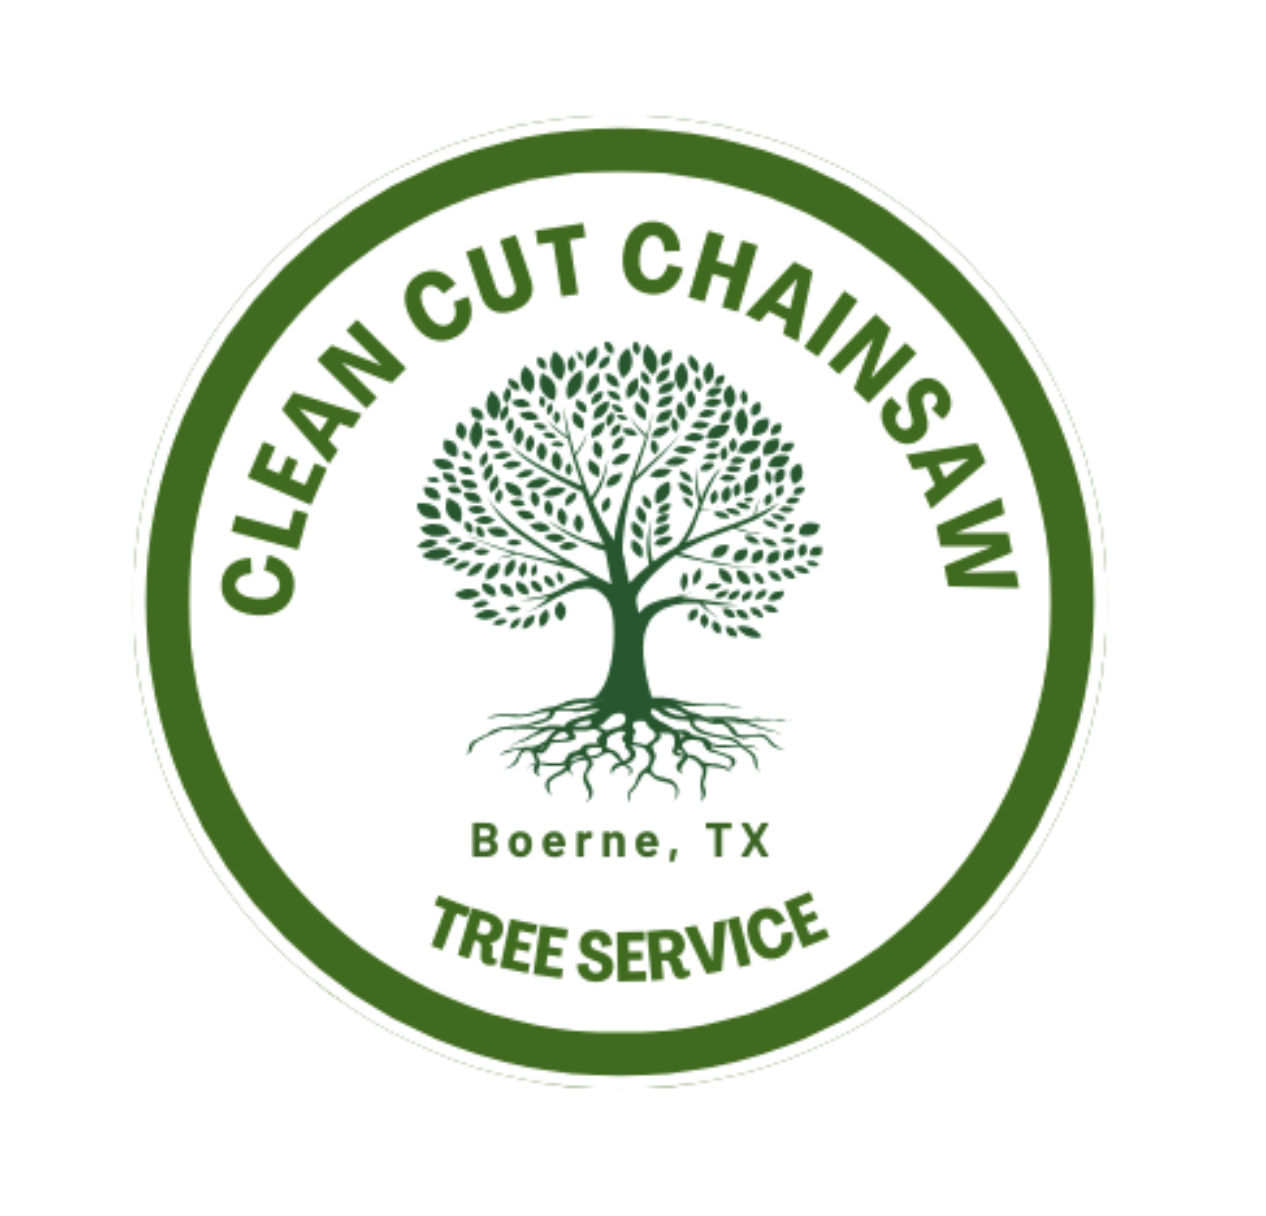 https://citationvault.com/wp-content/uploads/cpop_main_uploads/61/Clean-Cut-Chainsaw-Tree-Service.png